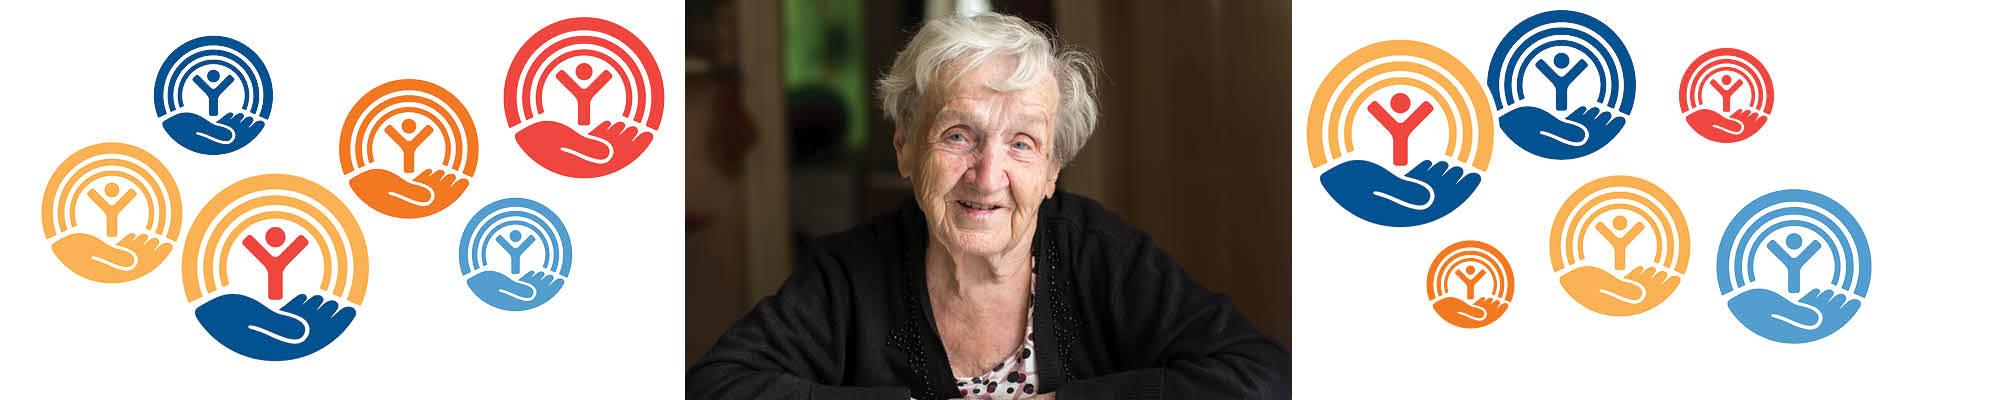 Senior aged woman looks at camera